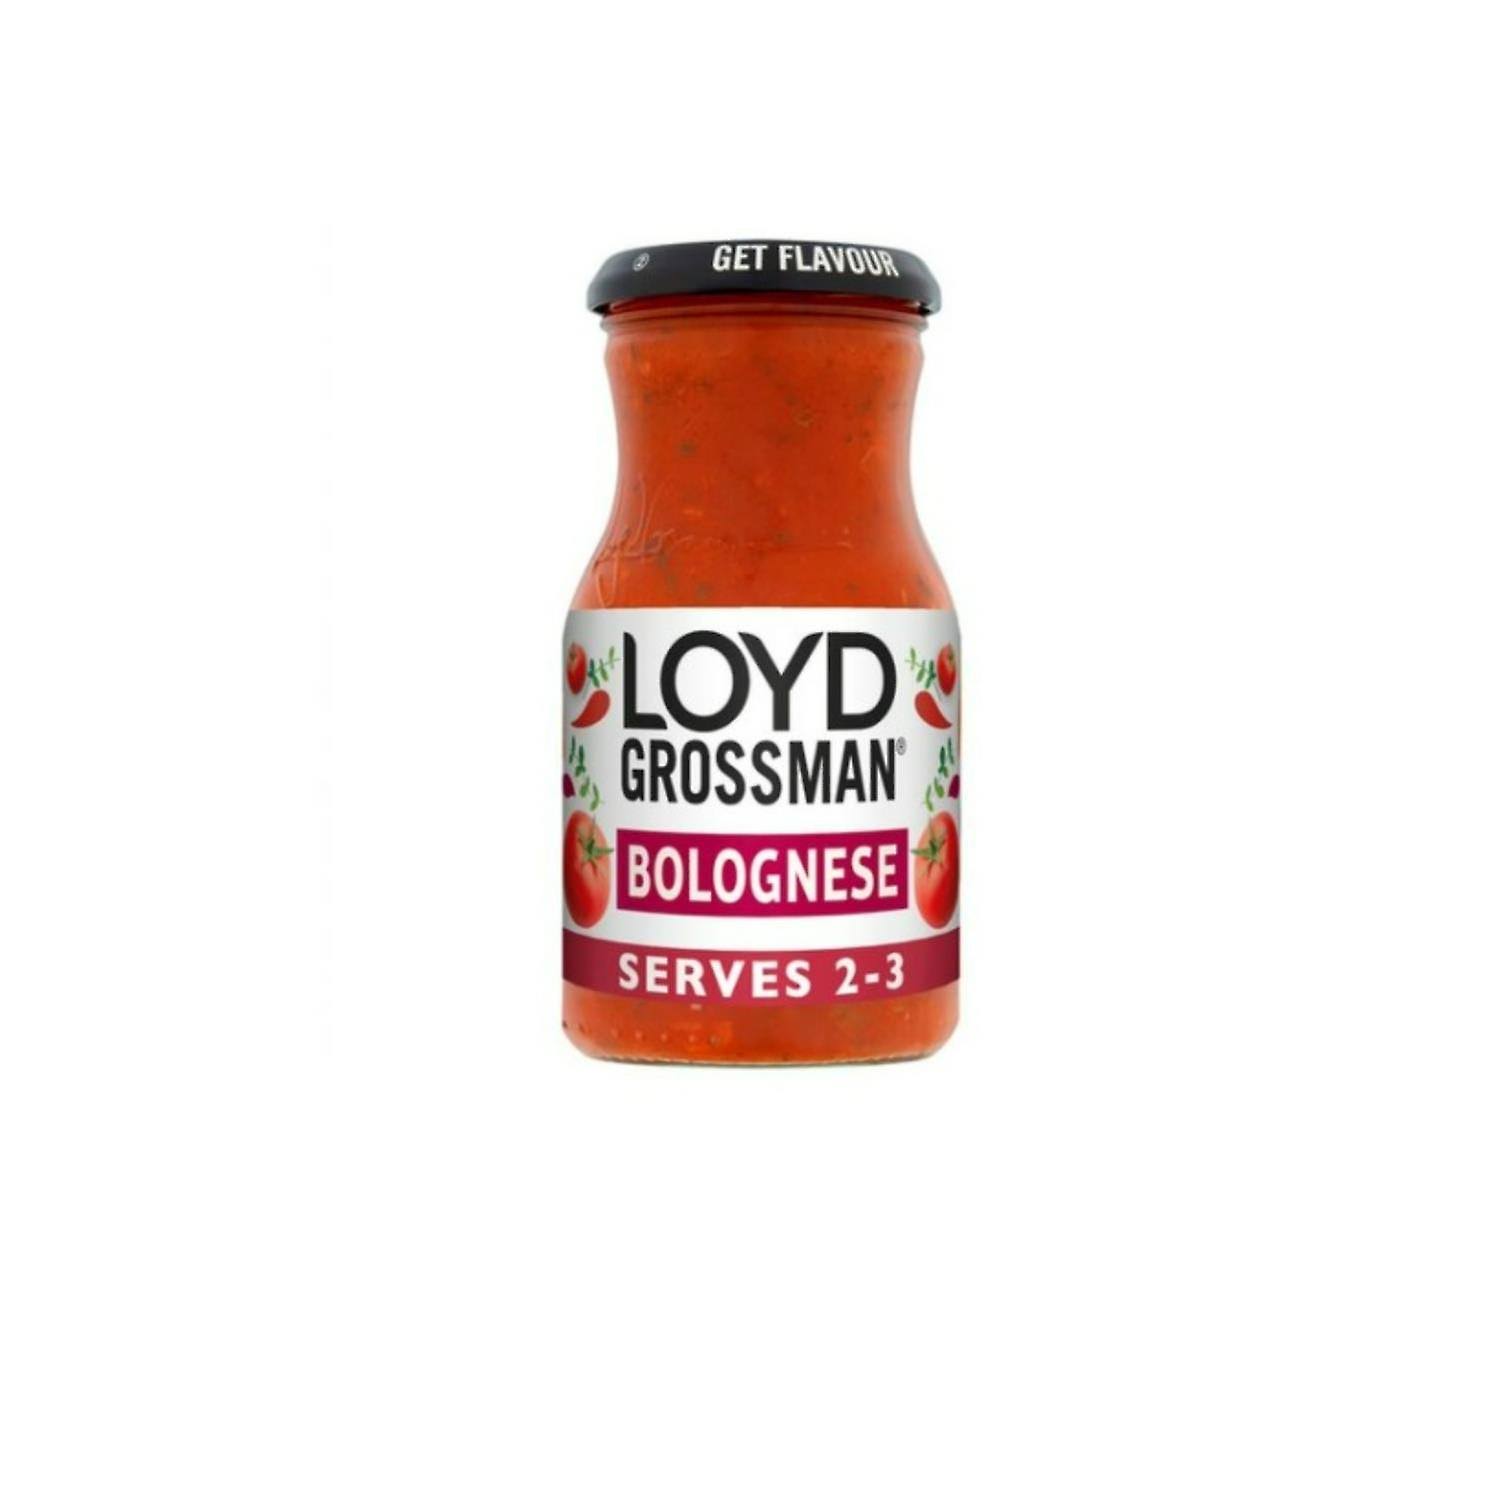 Loyd Grossman Bolognese Original Pasta Sauce 350g 1 Bottle